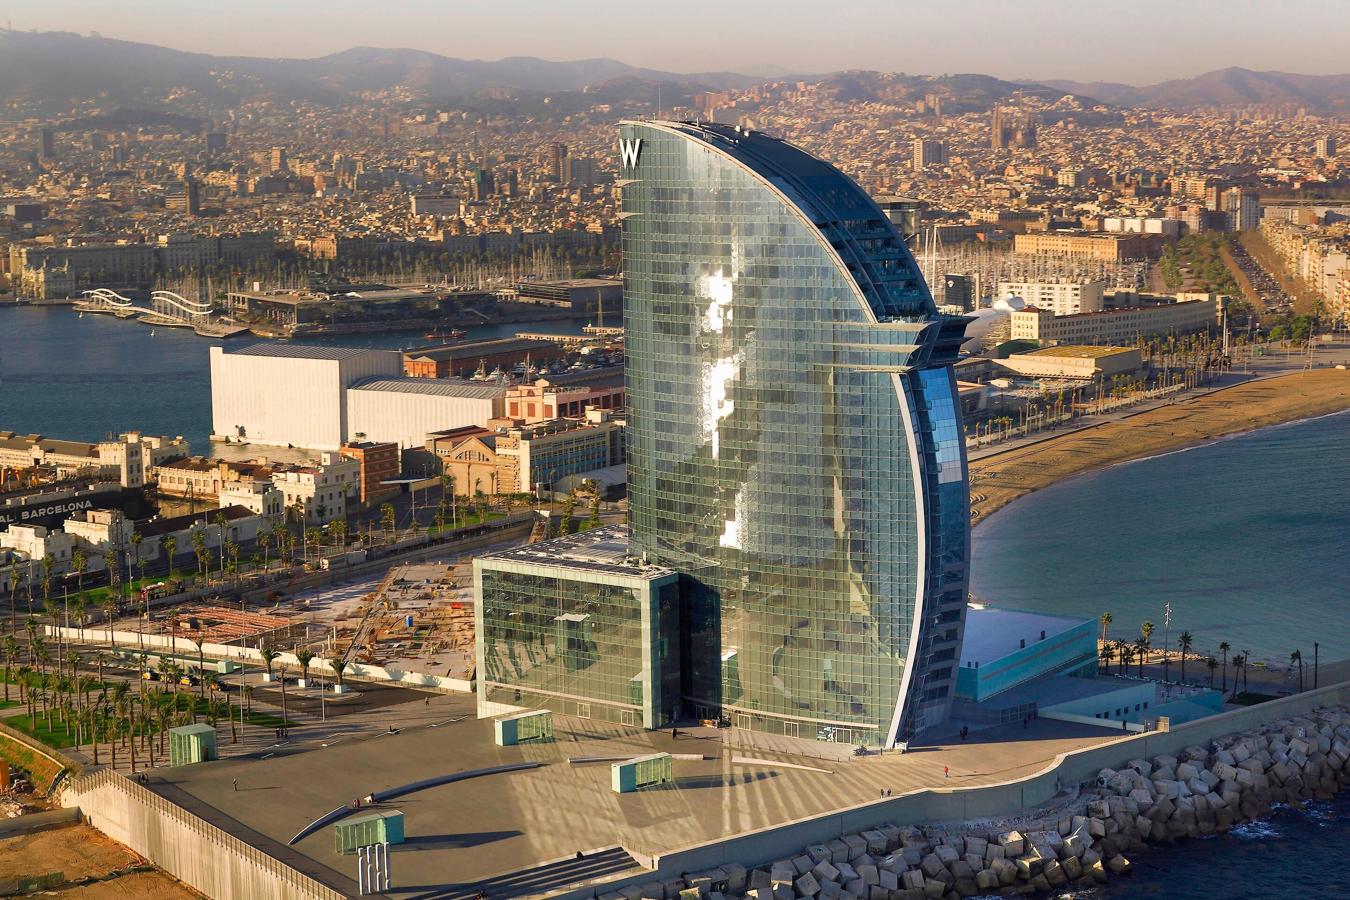 Mejor Hotel de Negocios de España 2021: W Barcelona